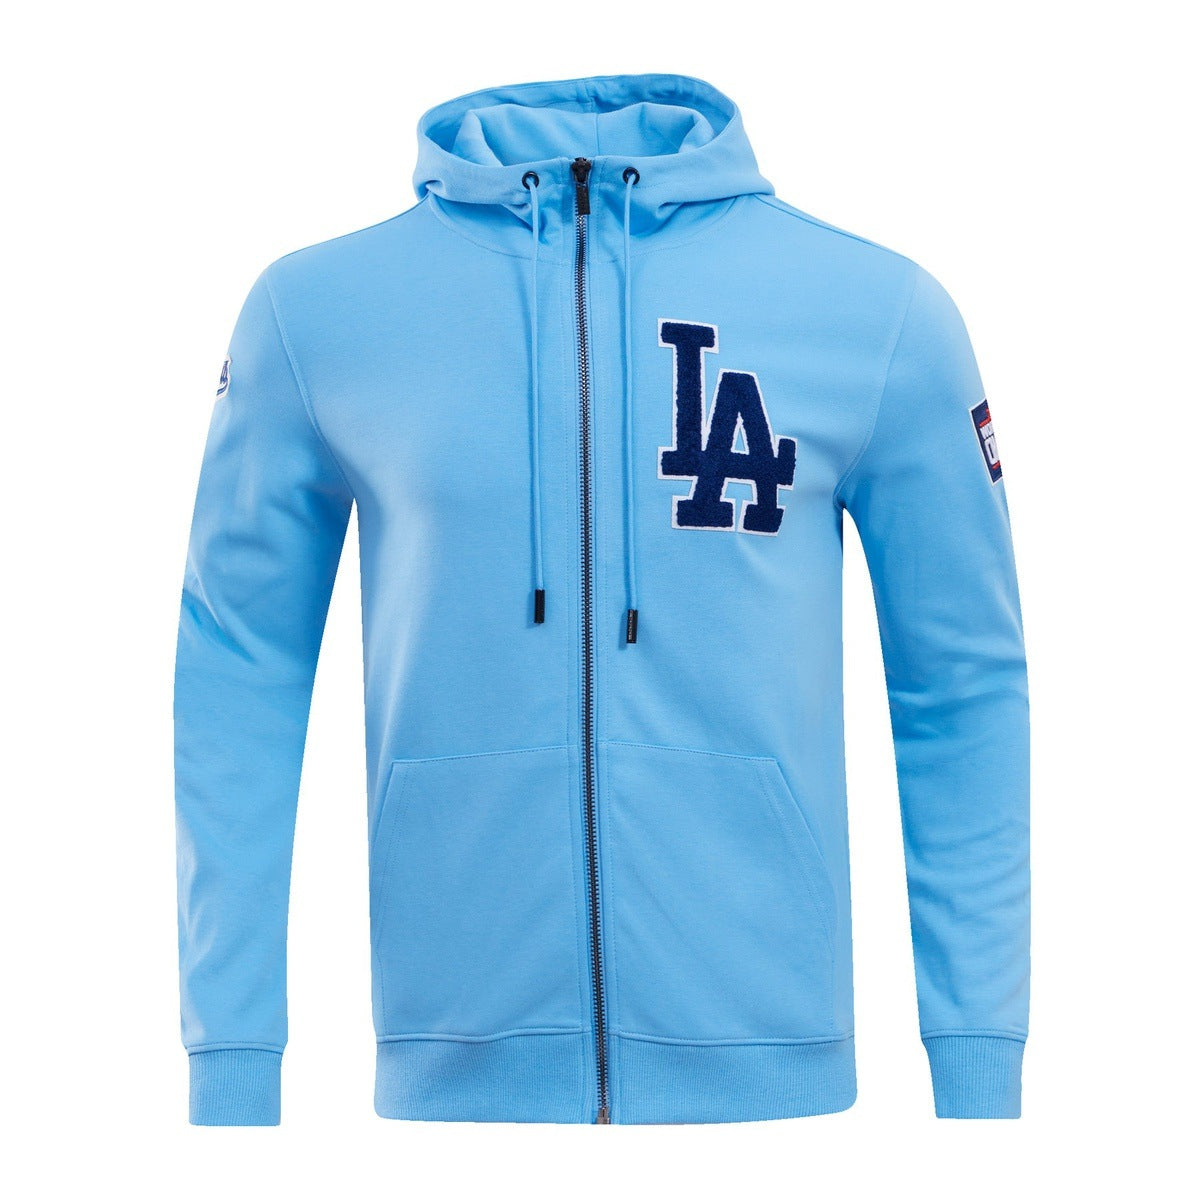 Men's Los Angeles Dodgers Pro Standard White Logo Pullover Hoodie